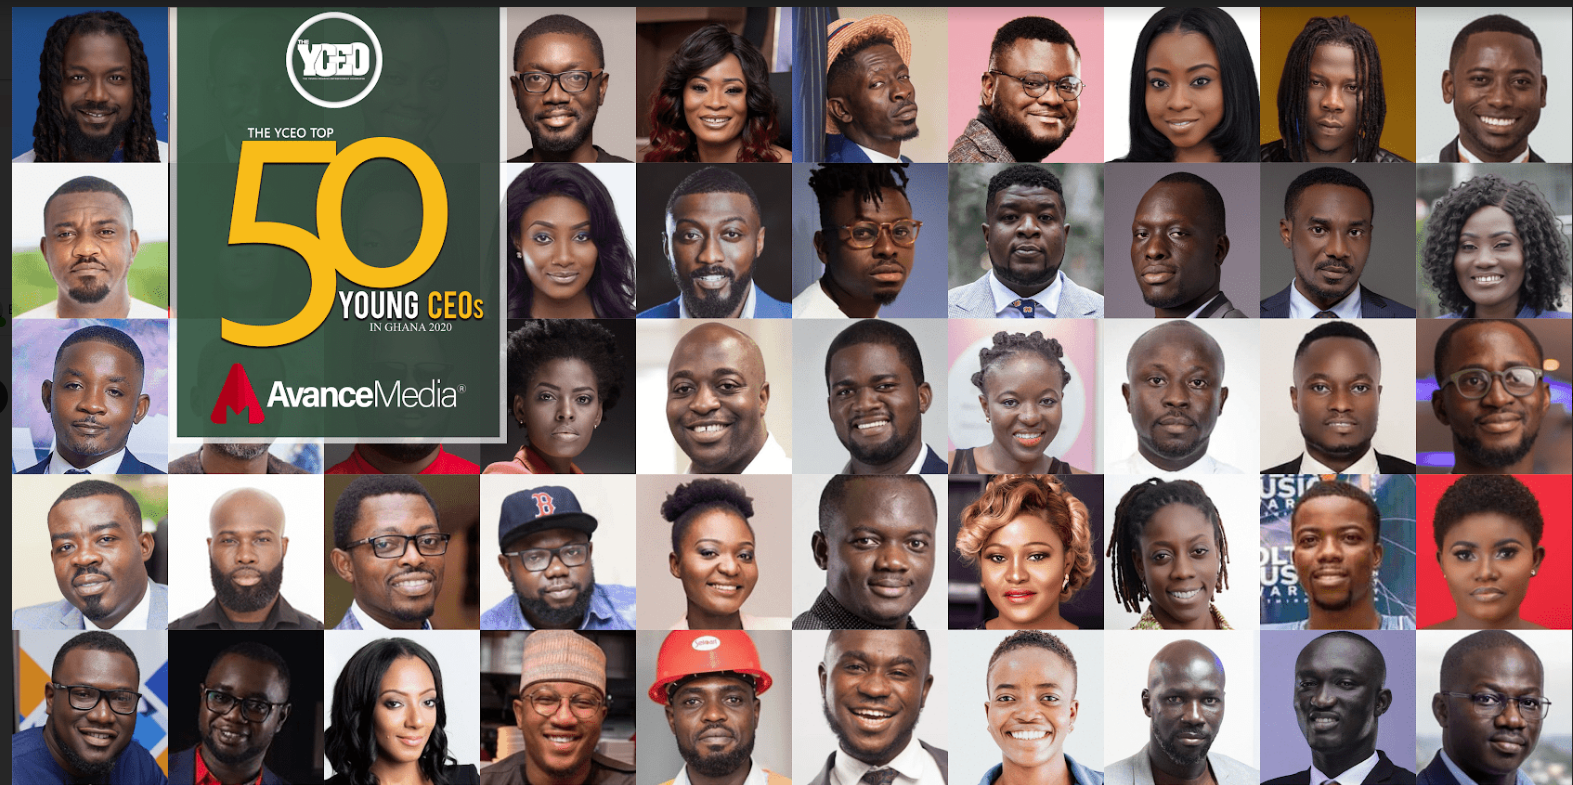 Shatta Wale, Stonebwoy & Samini named among 2020 Top 50 Young CEOs in Ghana